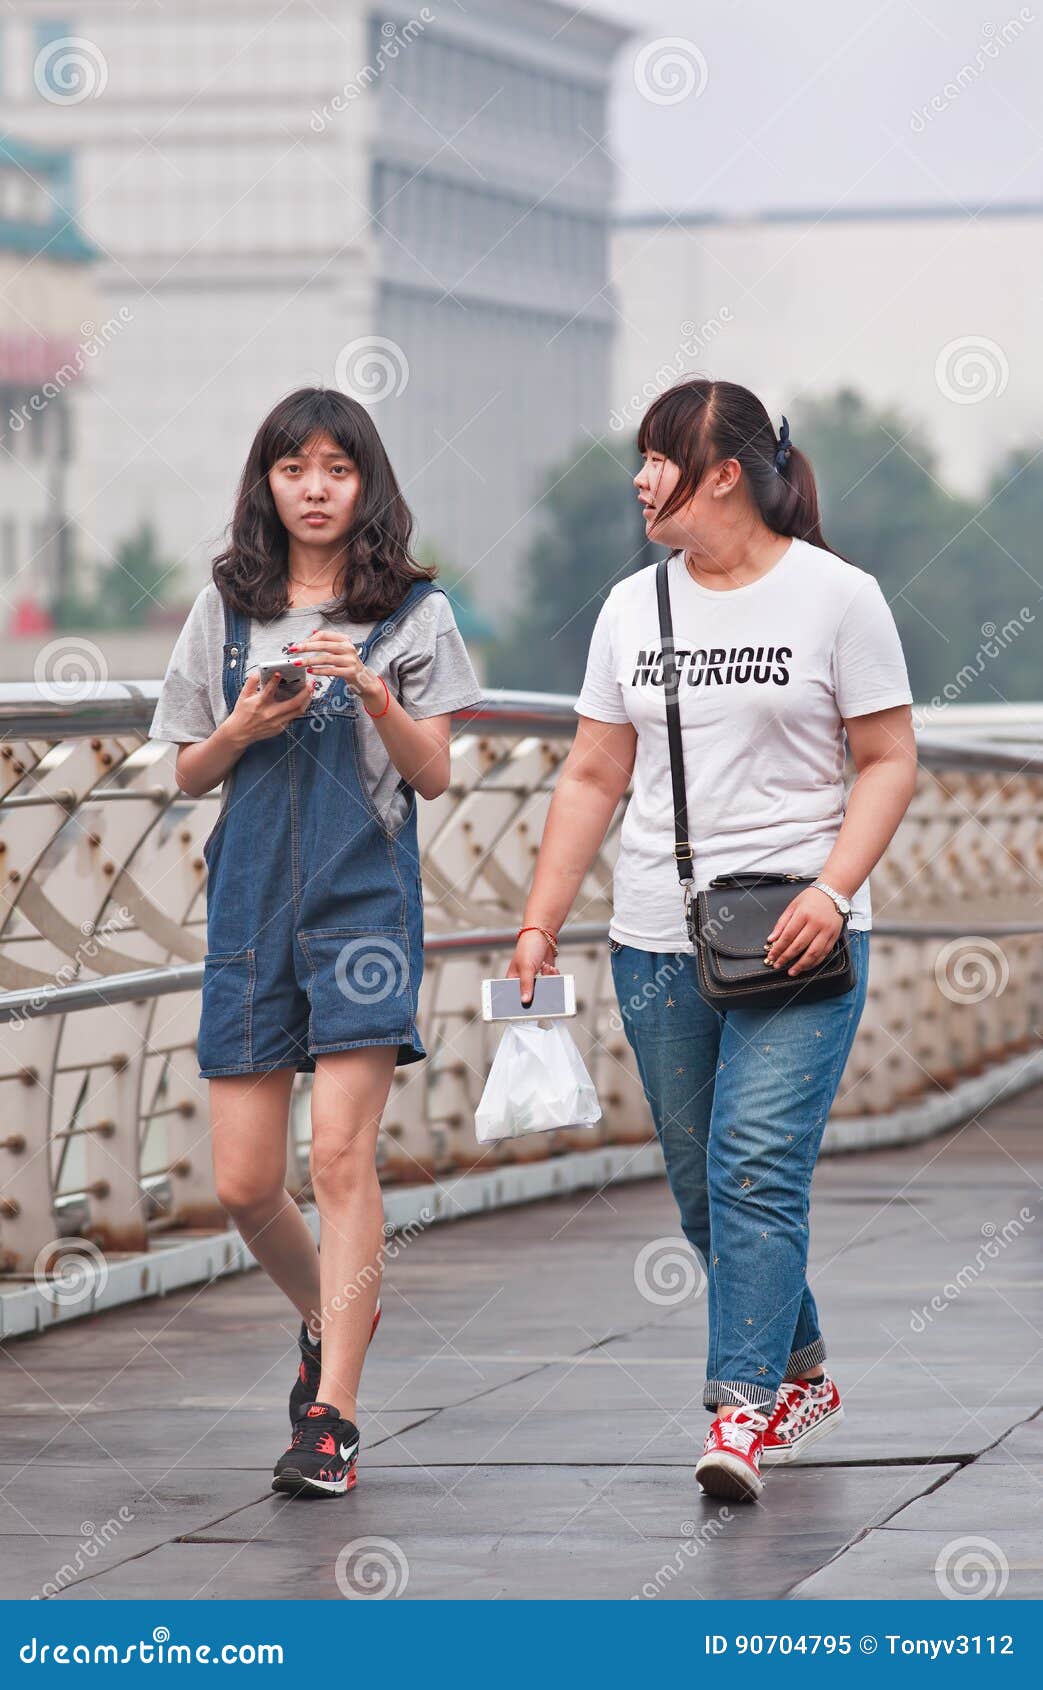 Asian Skinny Teens Photos